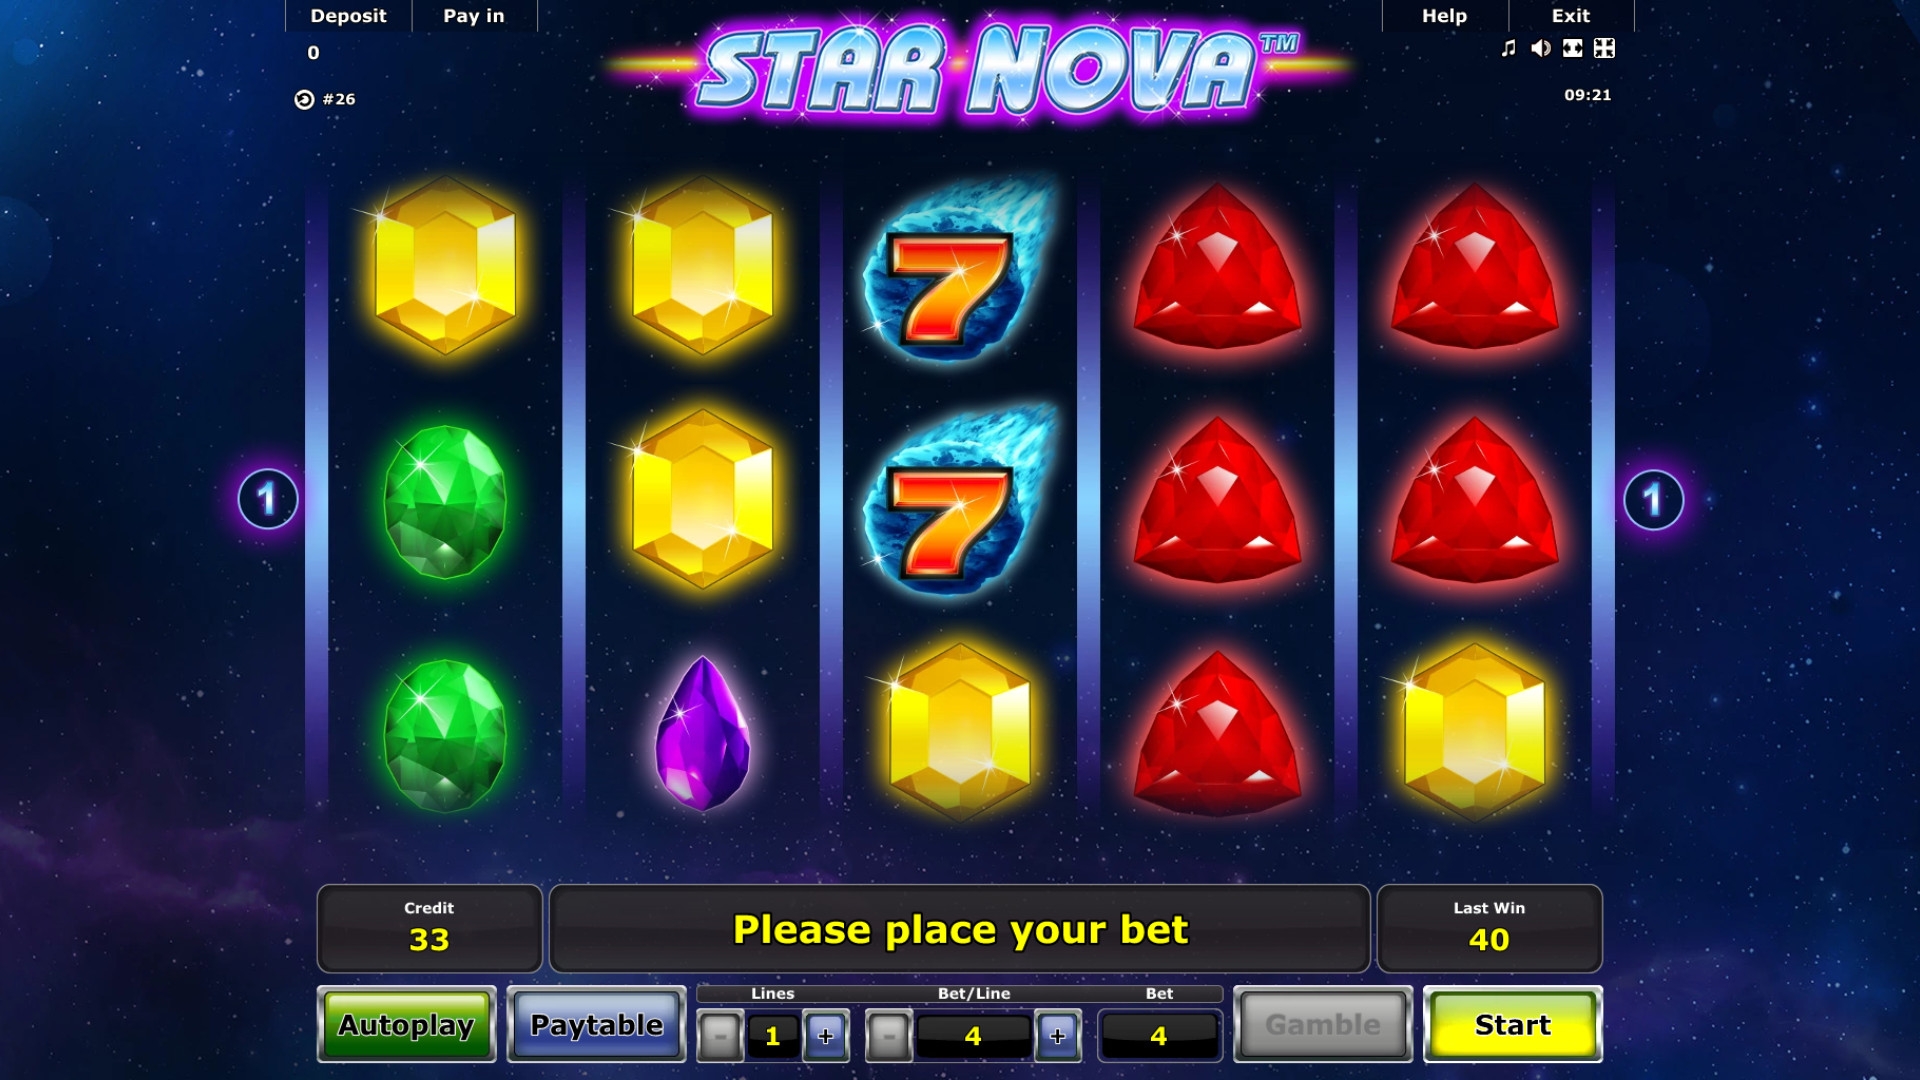 Star Nova (Star Nova) from category Slots